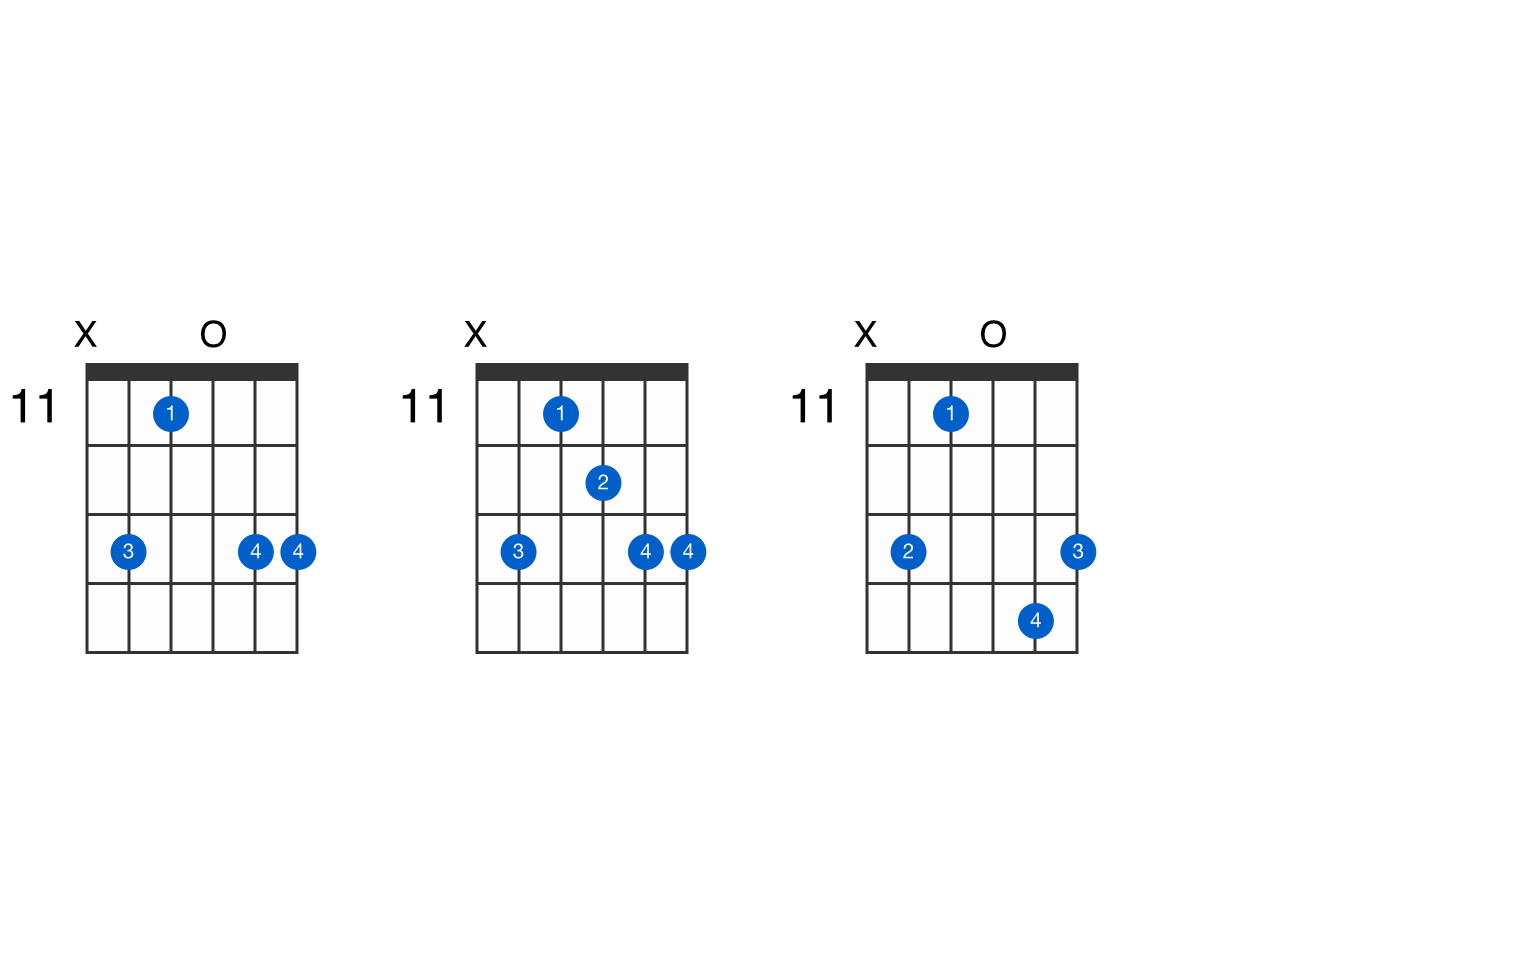 b flat 9 guitar chord